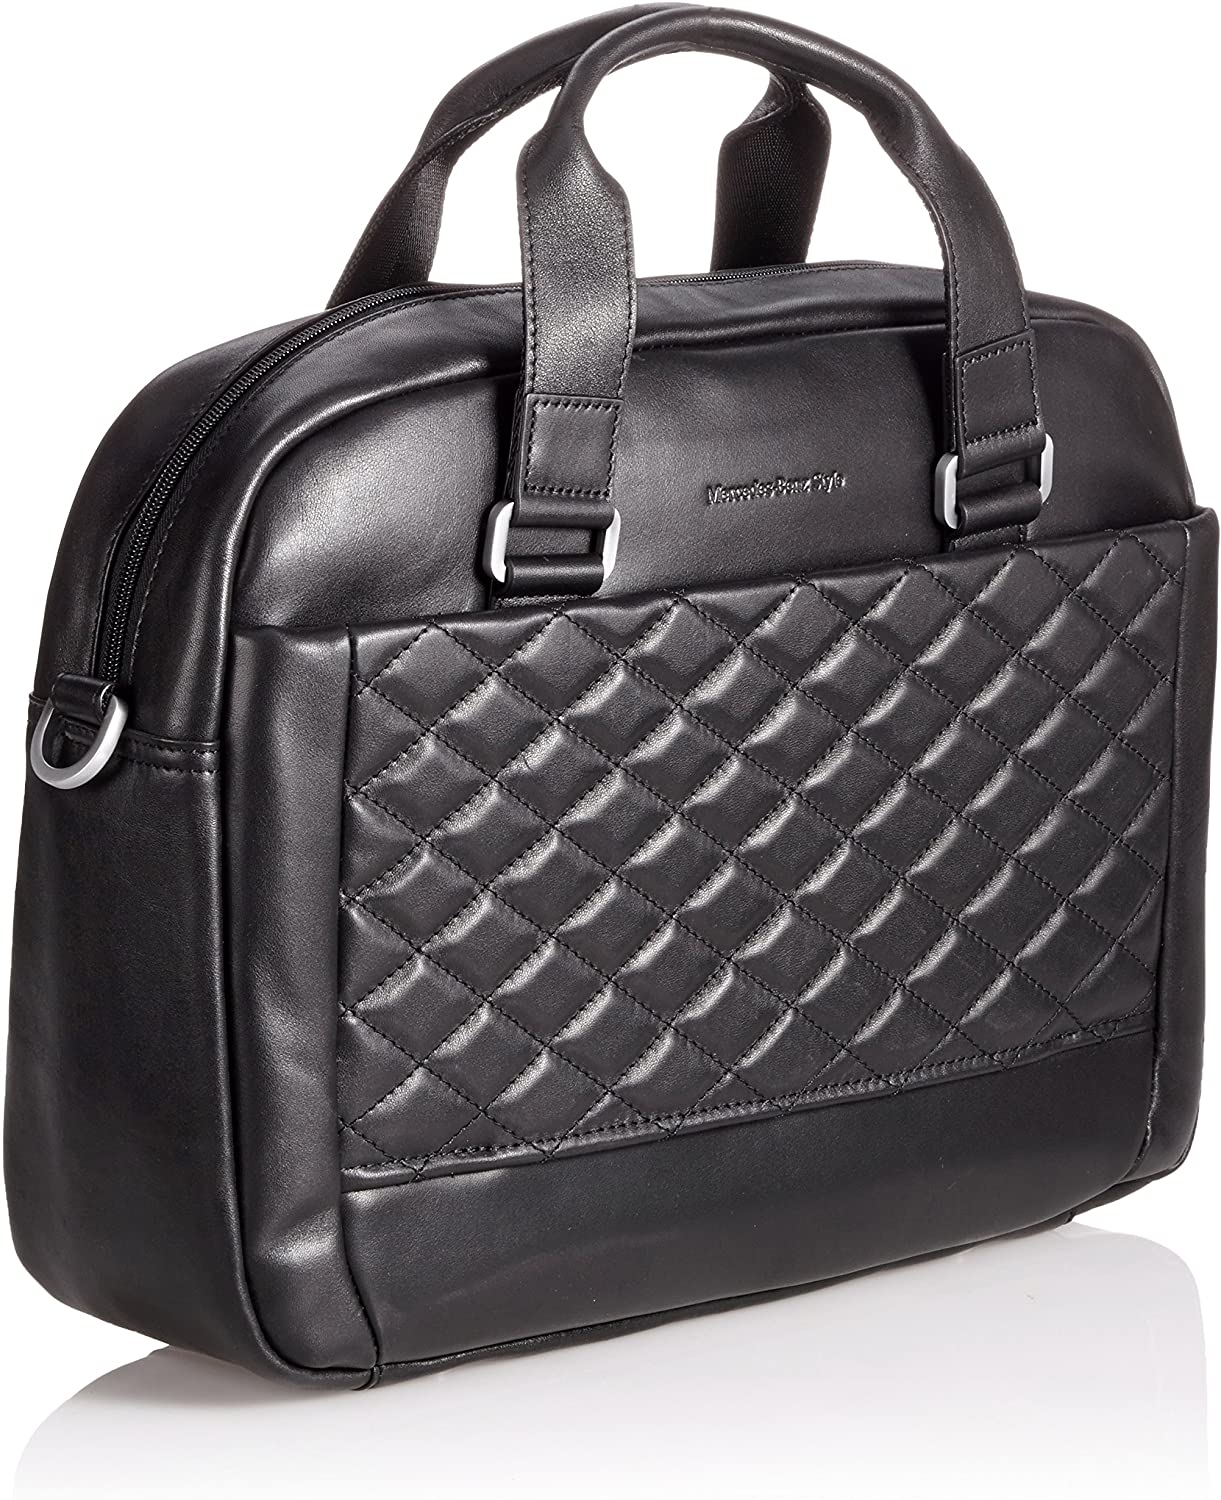 Mercedes-Benz Classic Leather Bag Black